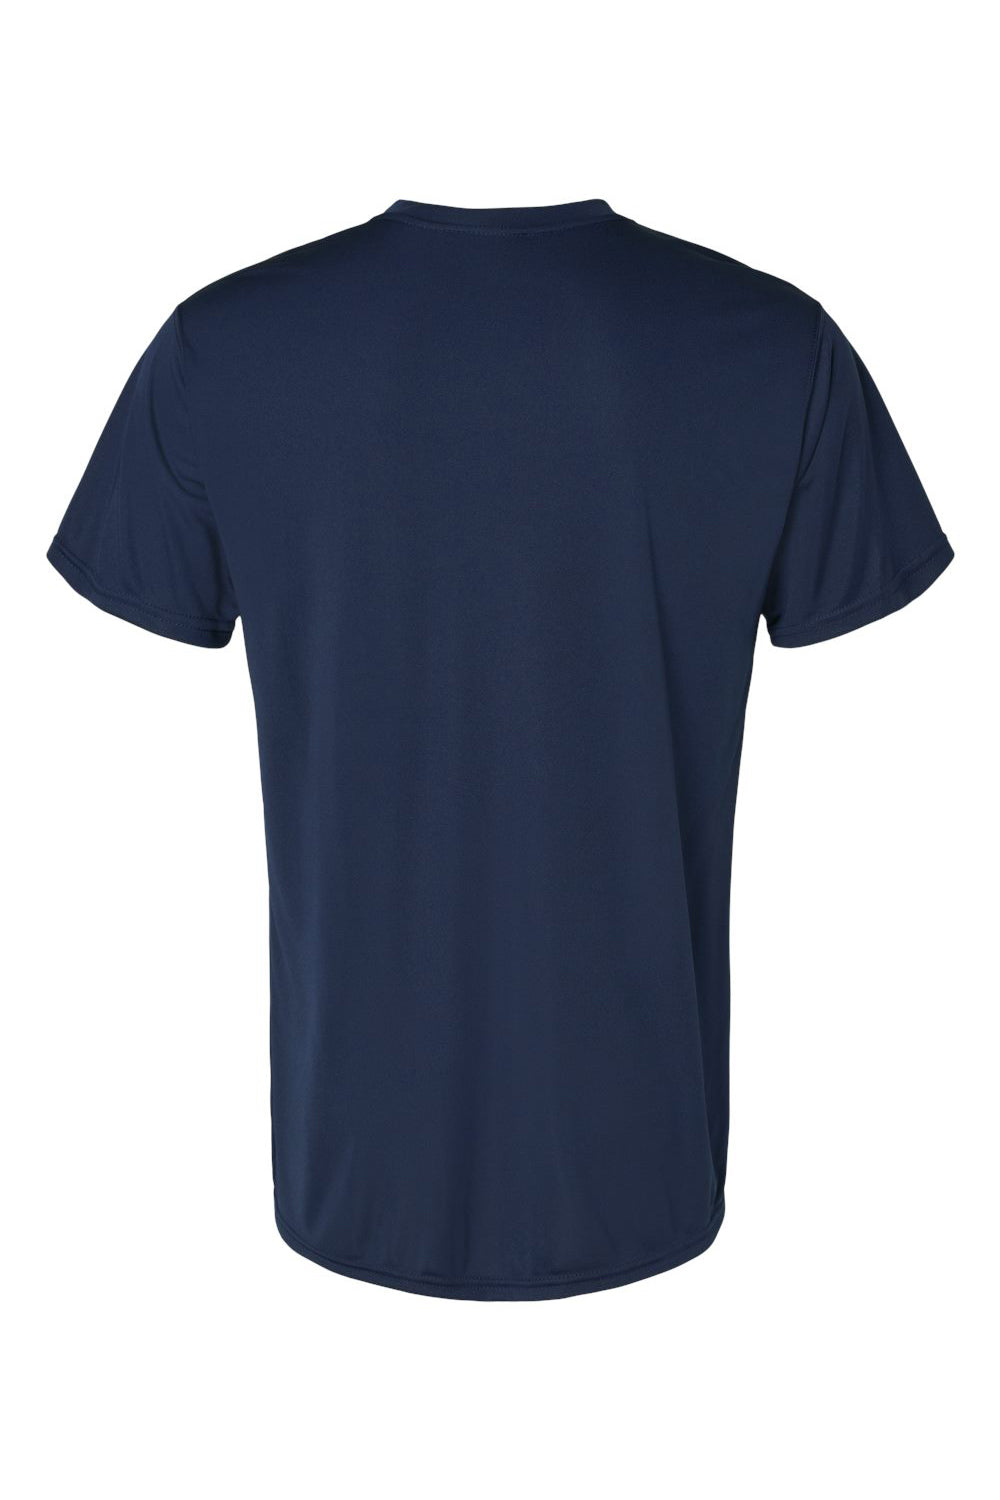 Holloway 222818 Mens Momentum Short Sleeve Crewneck T-Shirt Navy Blue Flat Back